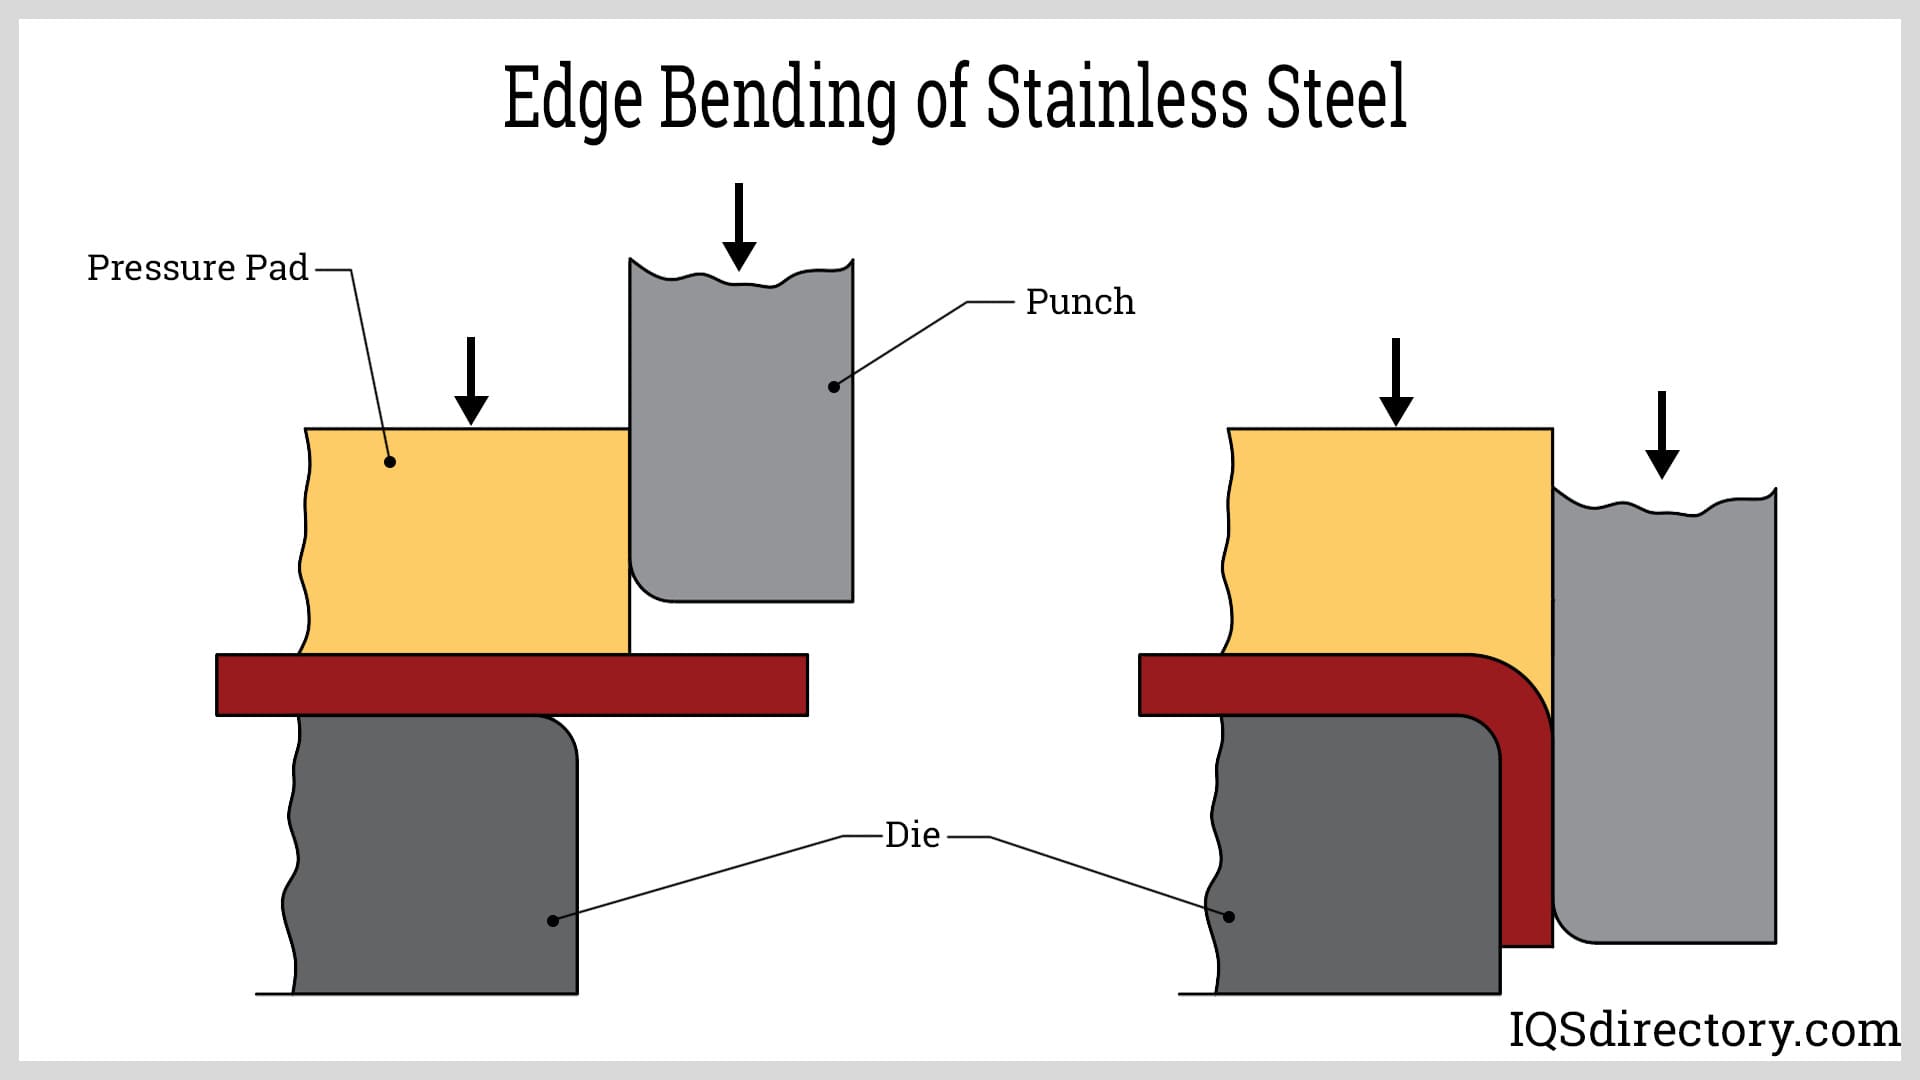 Edge Bending of Stainless Steel